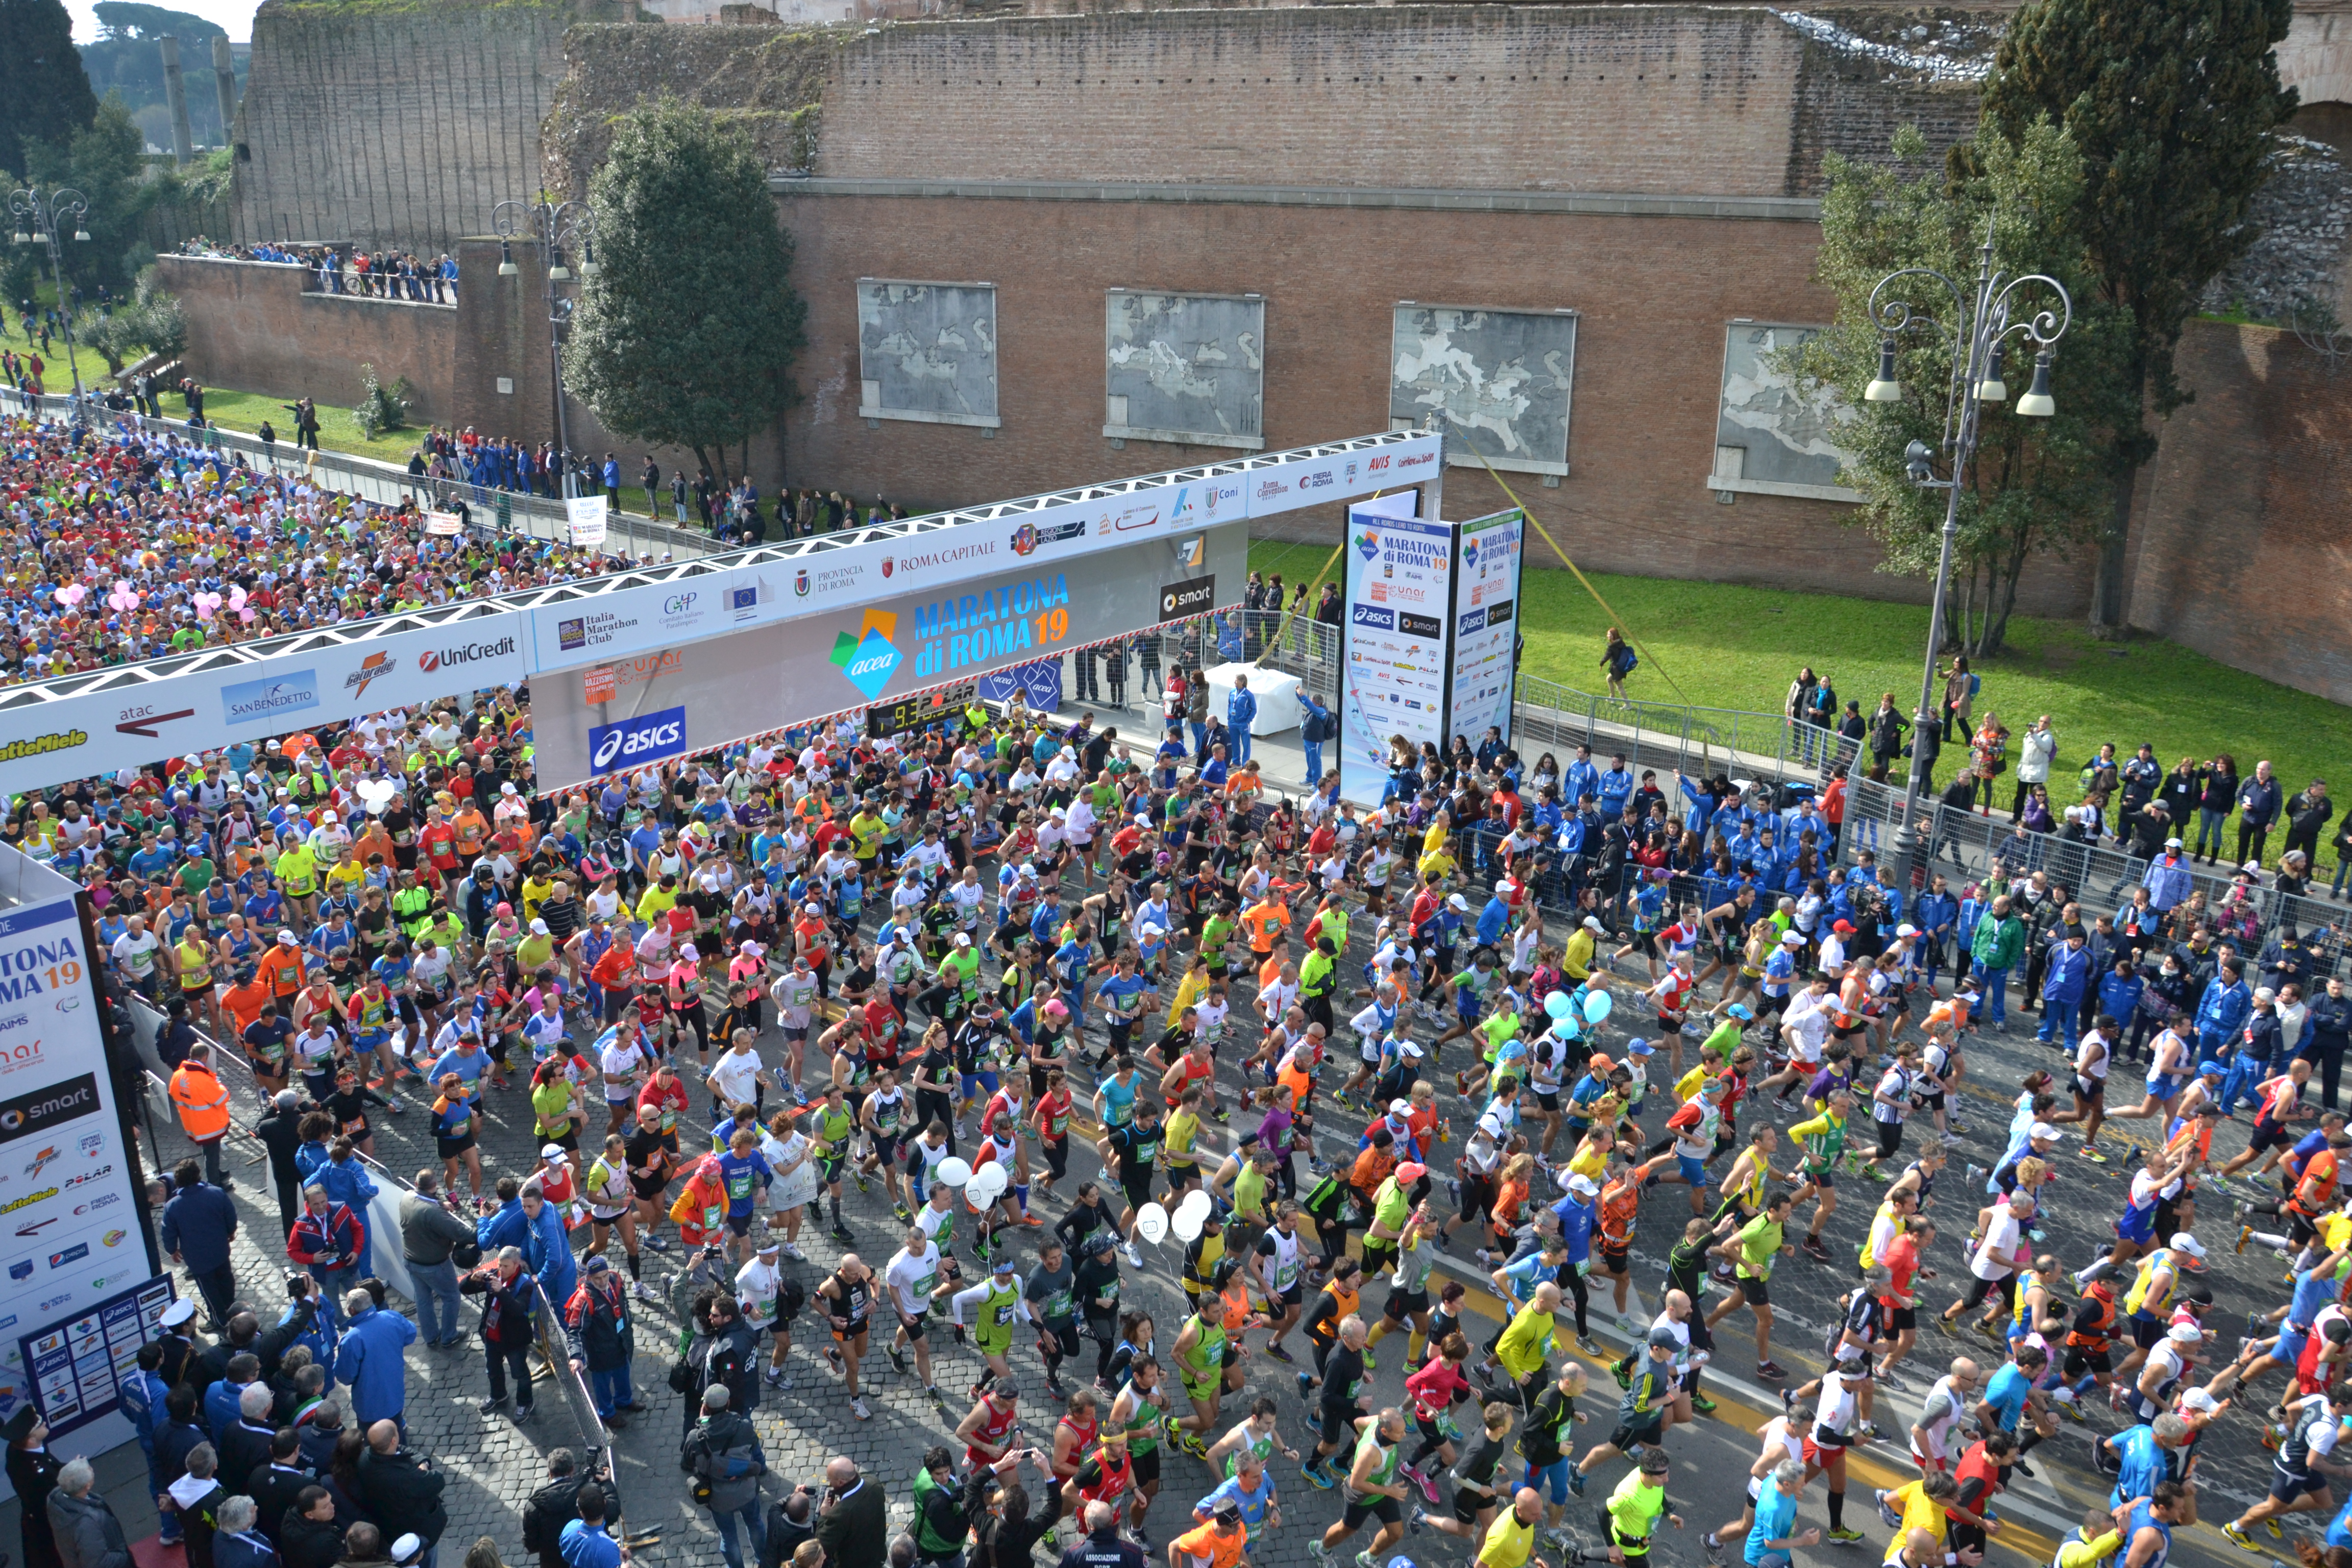 maratona-di-roma-2013-233